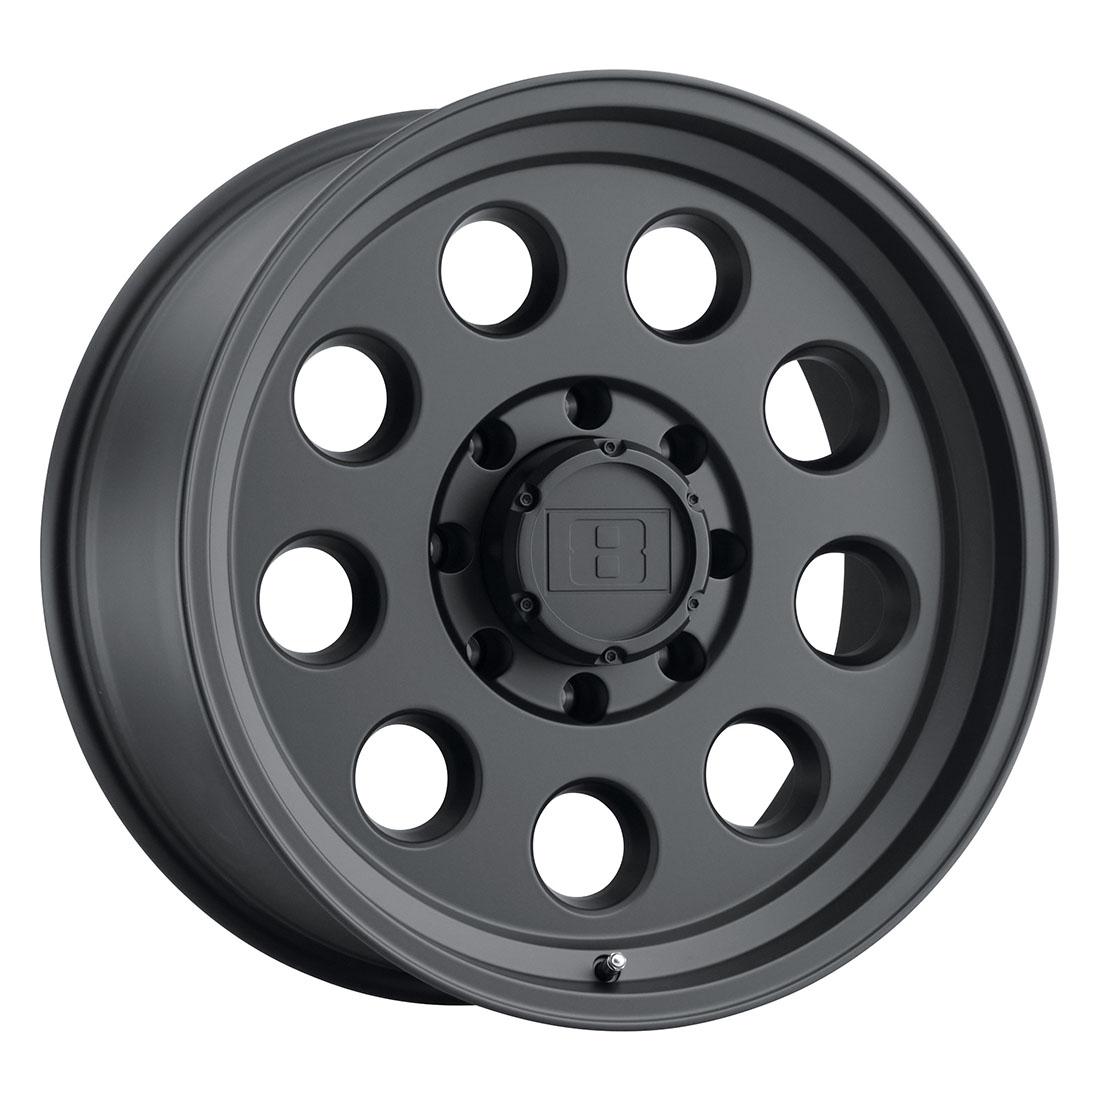 Level 8 Wheels HAULER Matte Black 16 inch + Mickey Thompson Tire - BAJA LEGEND MTZ  305/70/16  NW